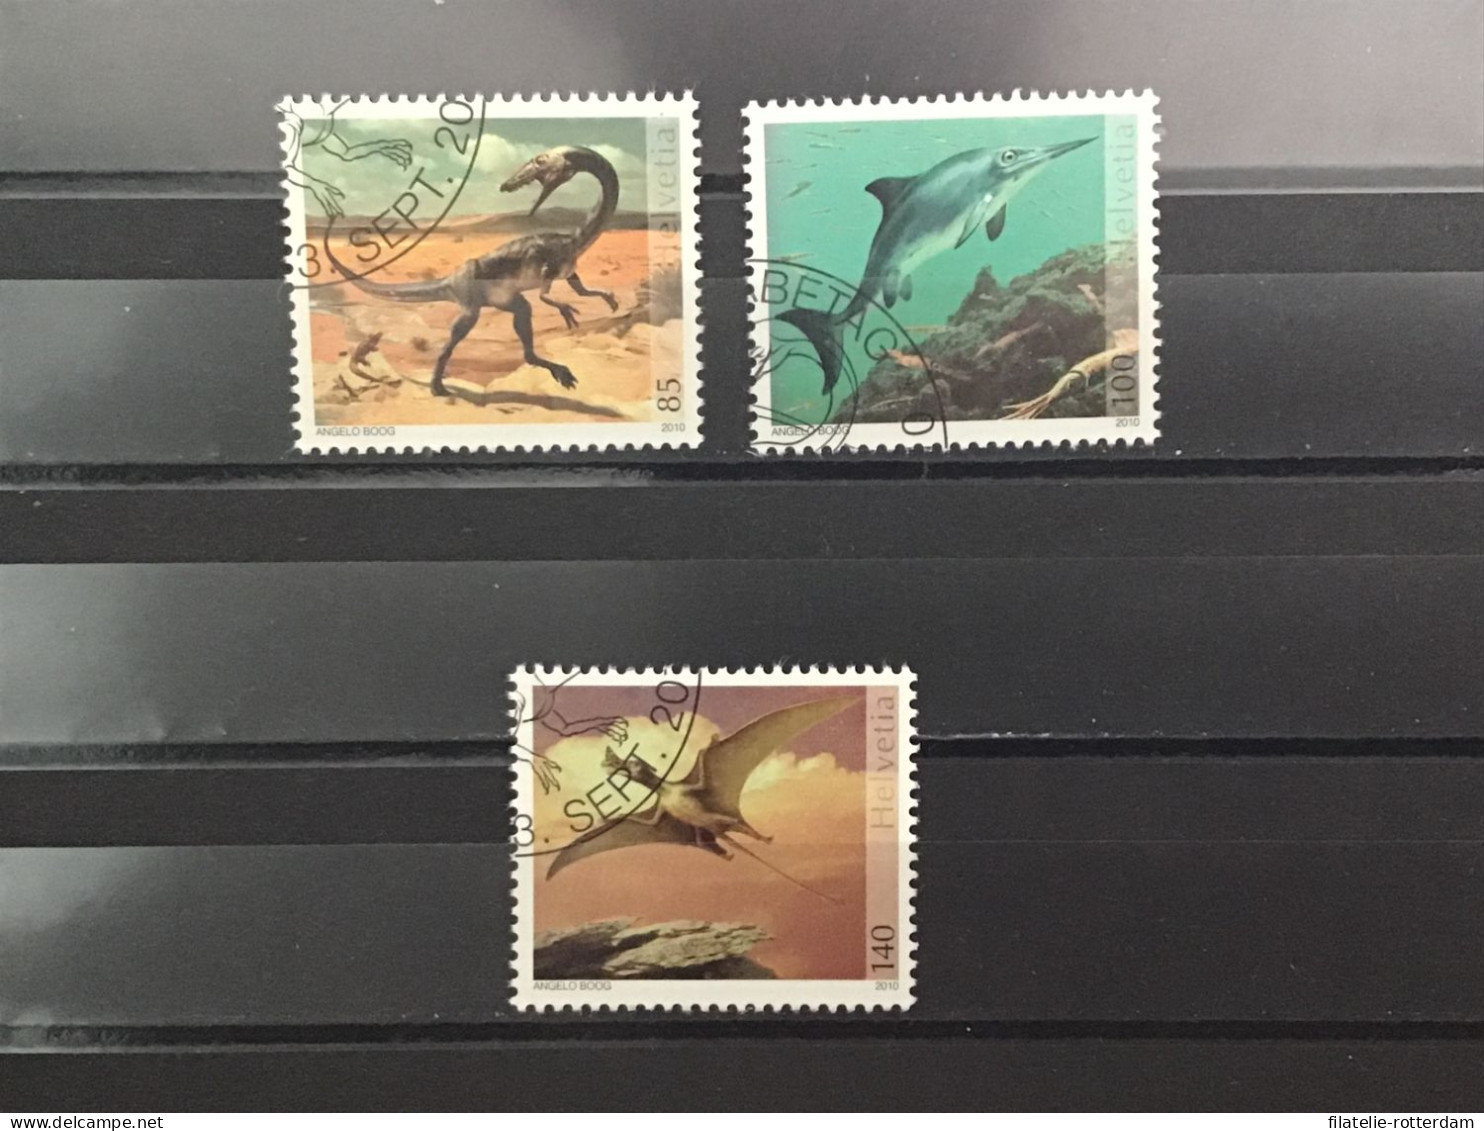 Switzerland / Zwitserland - Complete Set Prehistoric Animals 2010 - Used Stamps